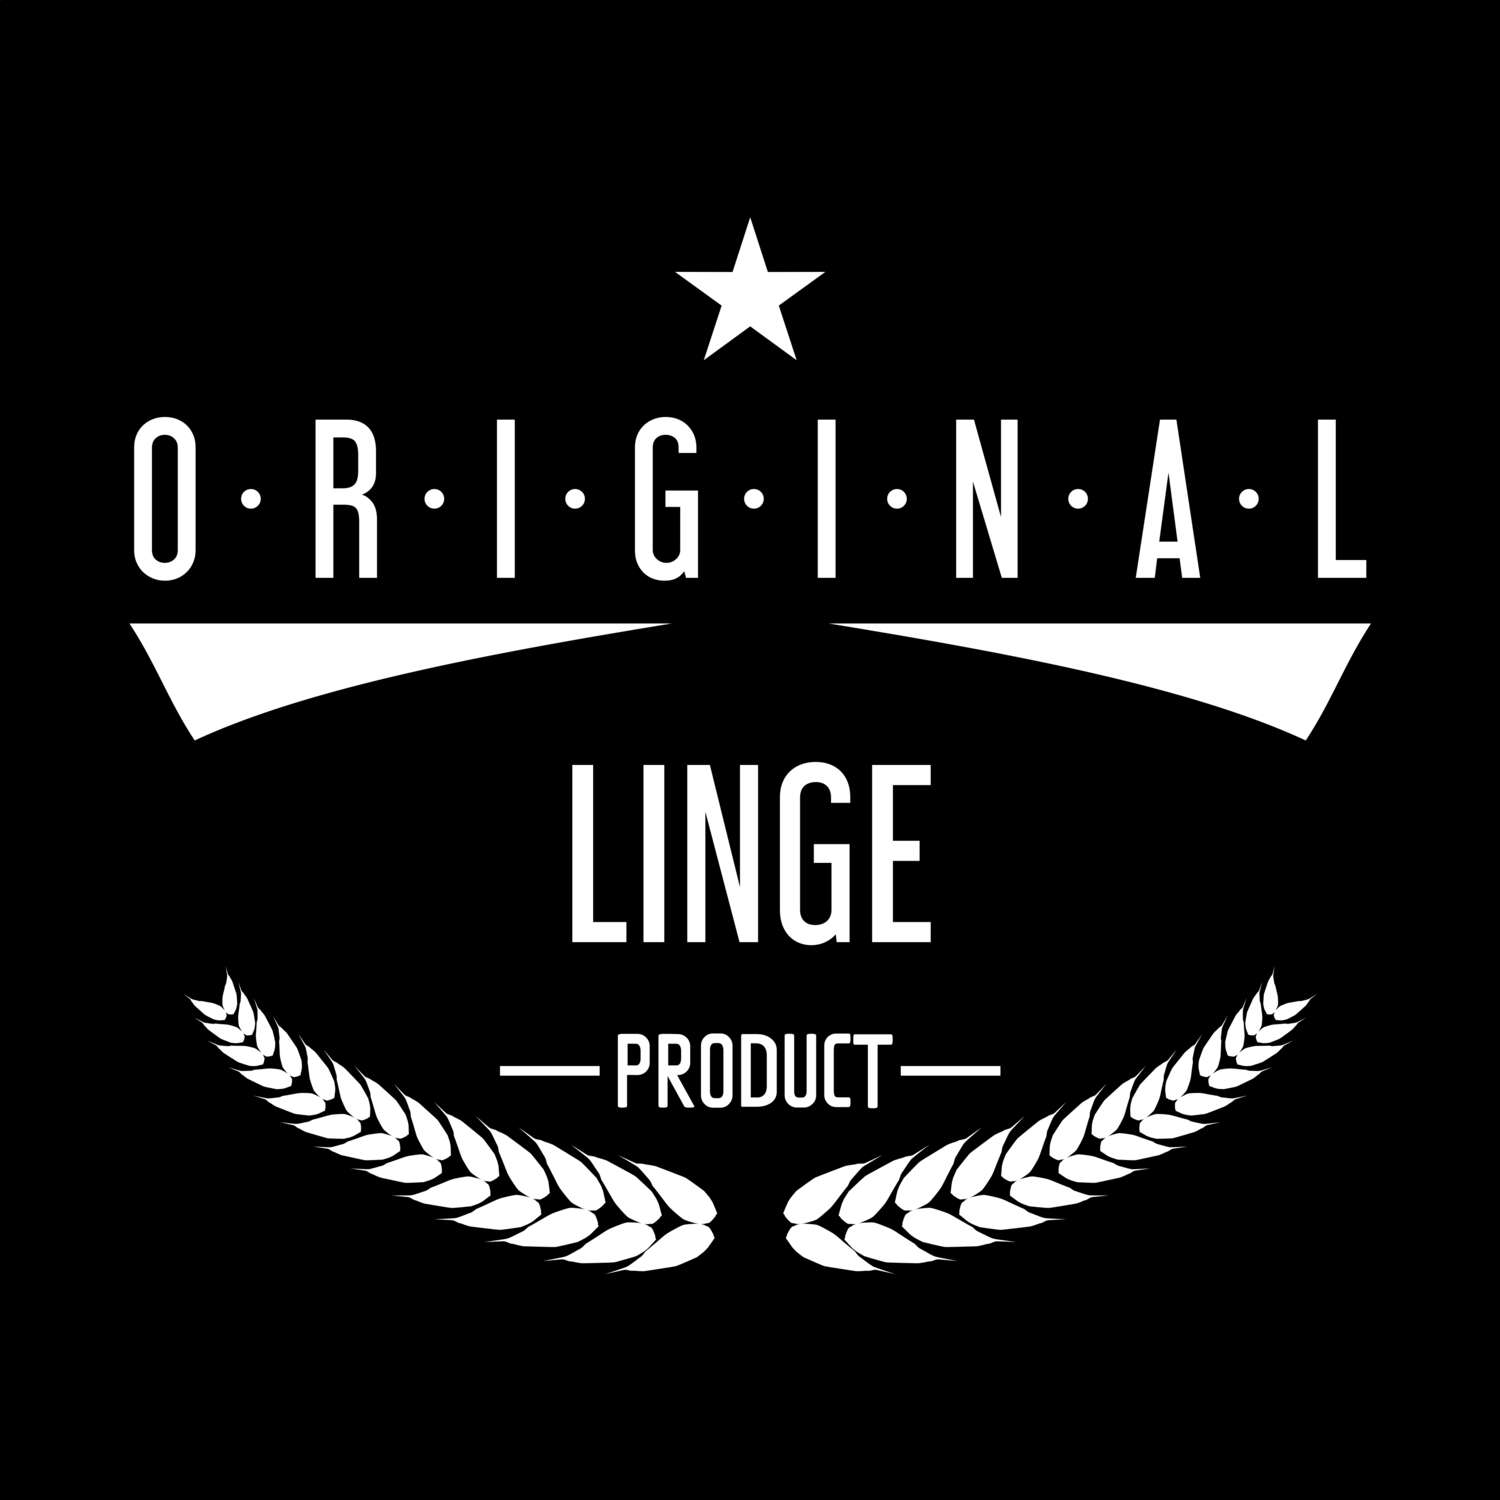 Linge T-Shirt »Original Product«